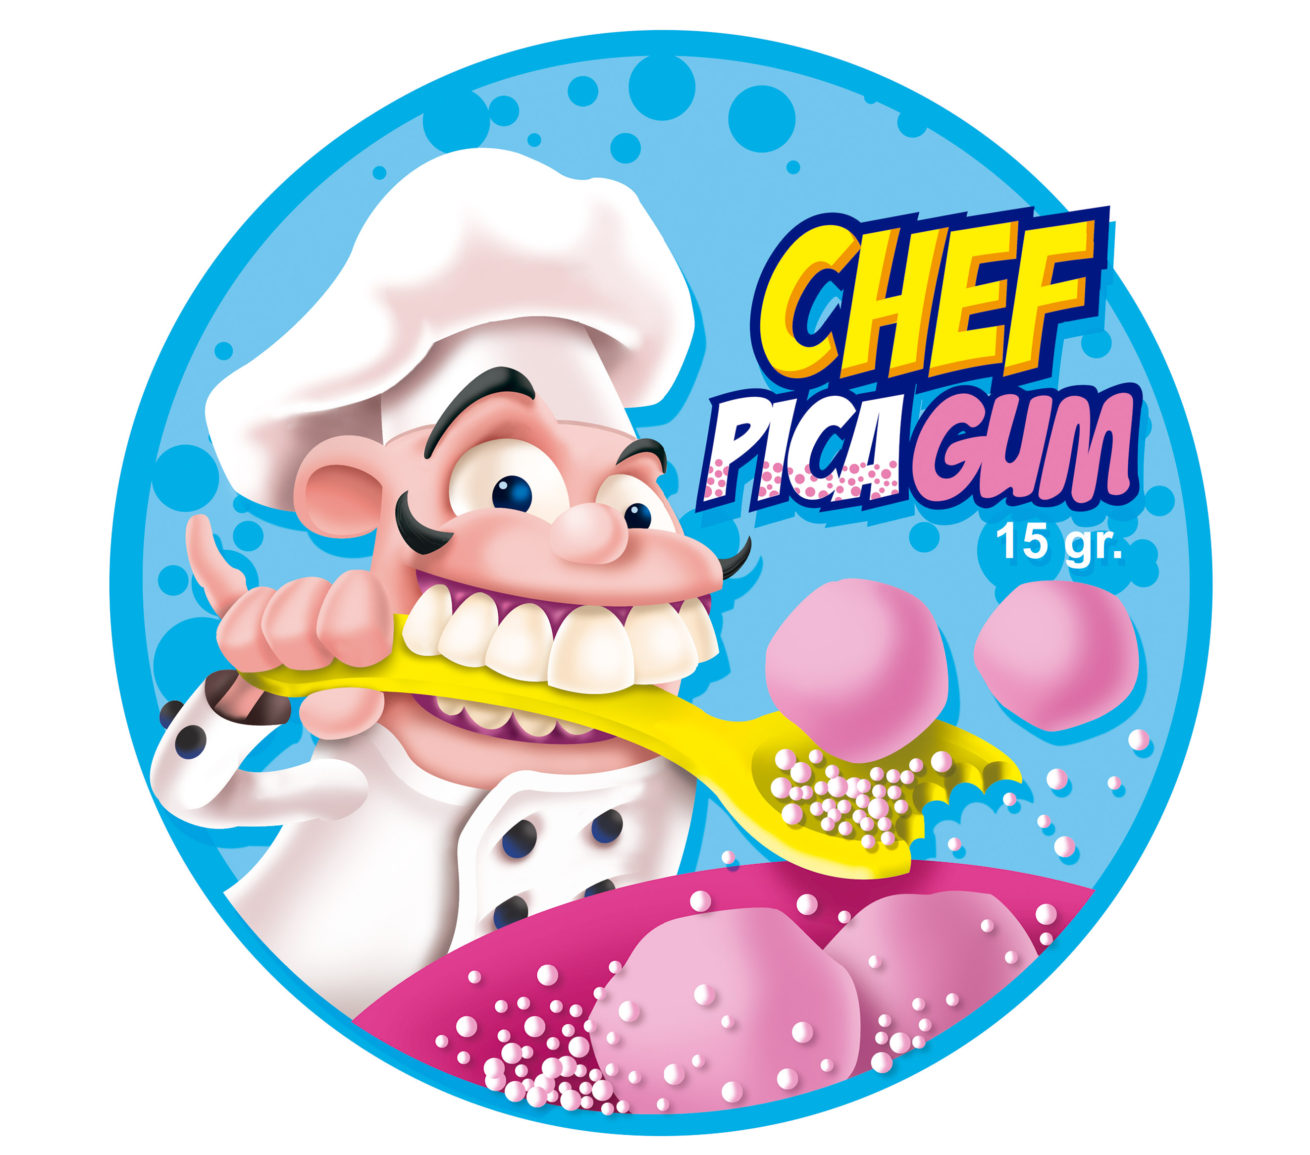 Chef Pica Gum - Poster - Juan Ángel Ortiz